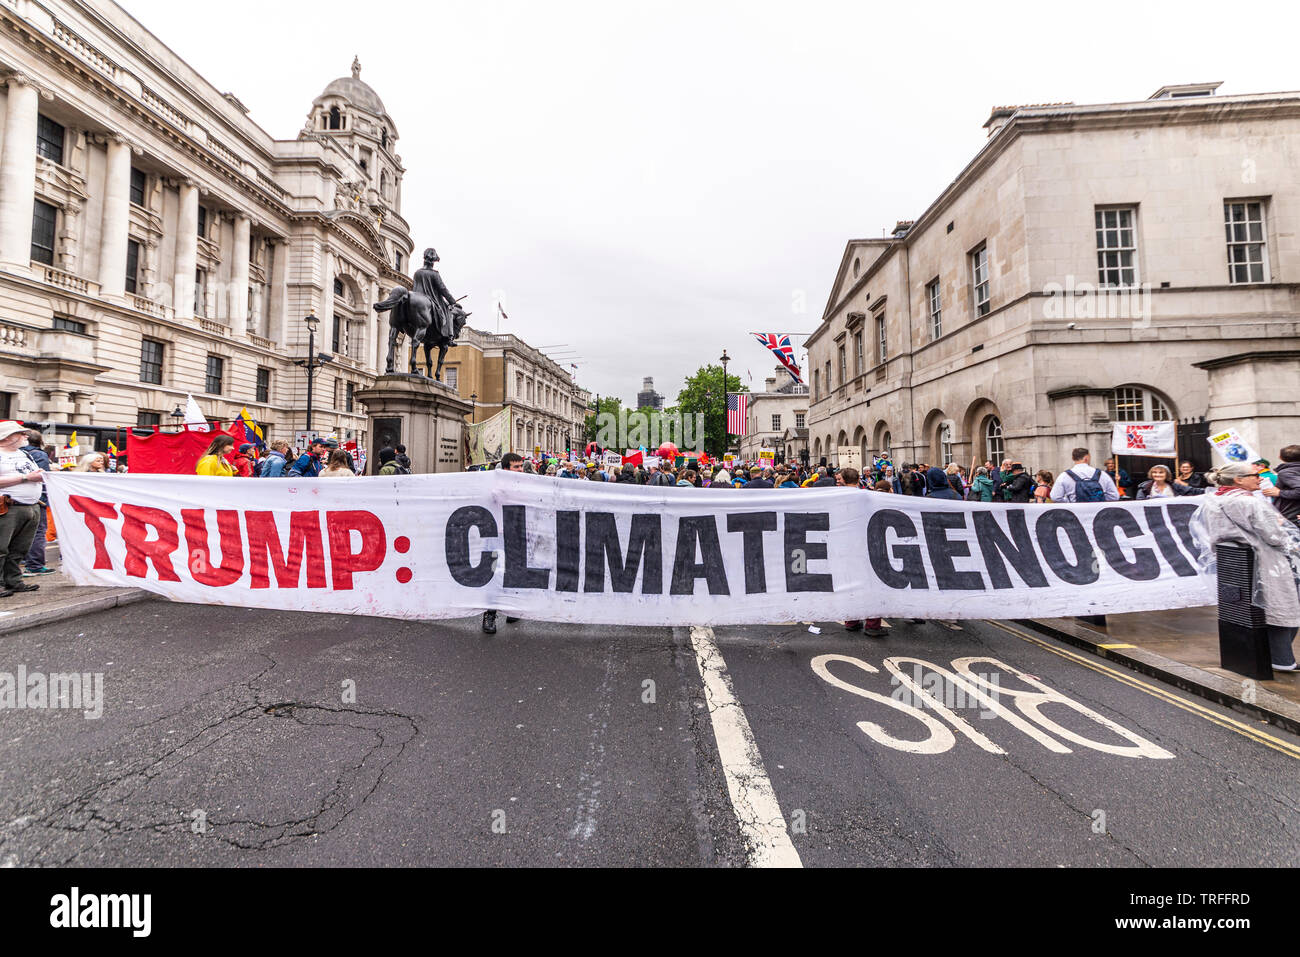 Trump Klima Völkermord protestieren Banner durch Demonstranten während der US-Präsident Donald Trump Staatsbesuch 2019 statt. Whitehall, London, UK. Demonstration Stockfoto